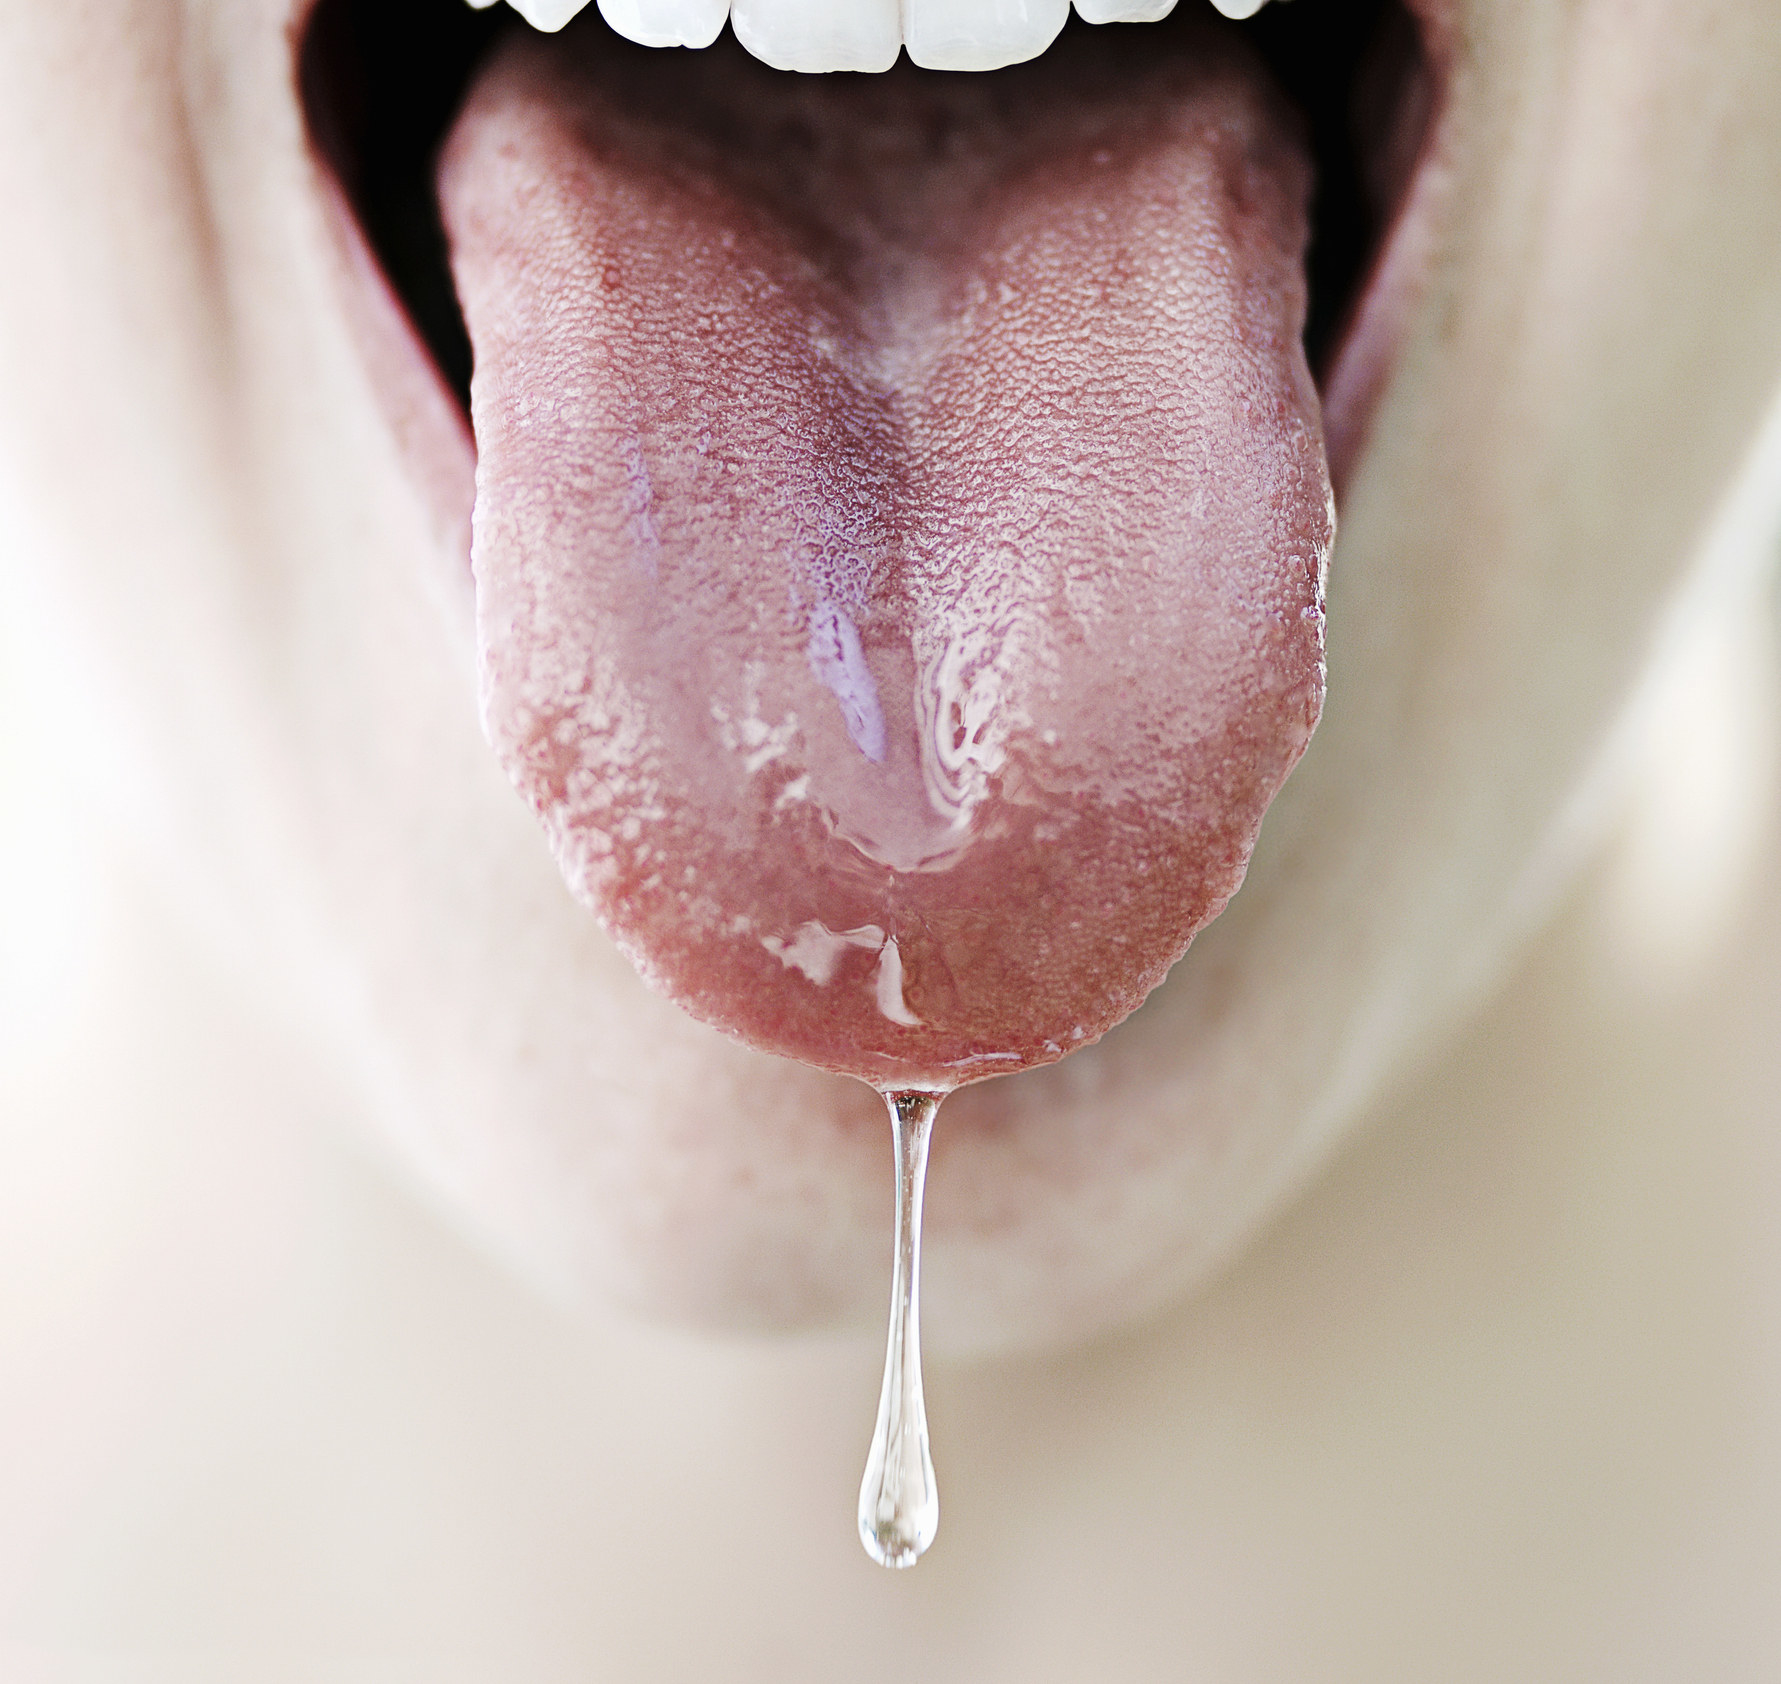 Closeup of a tongue salivating